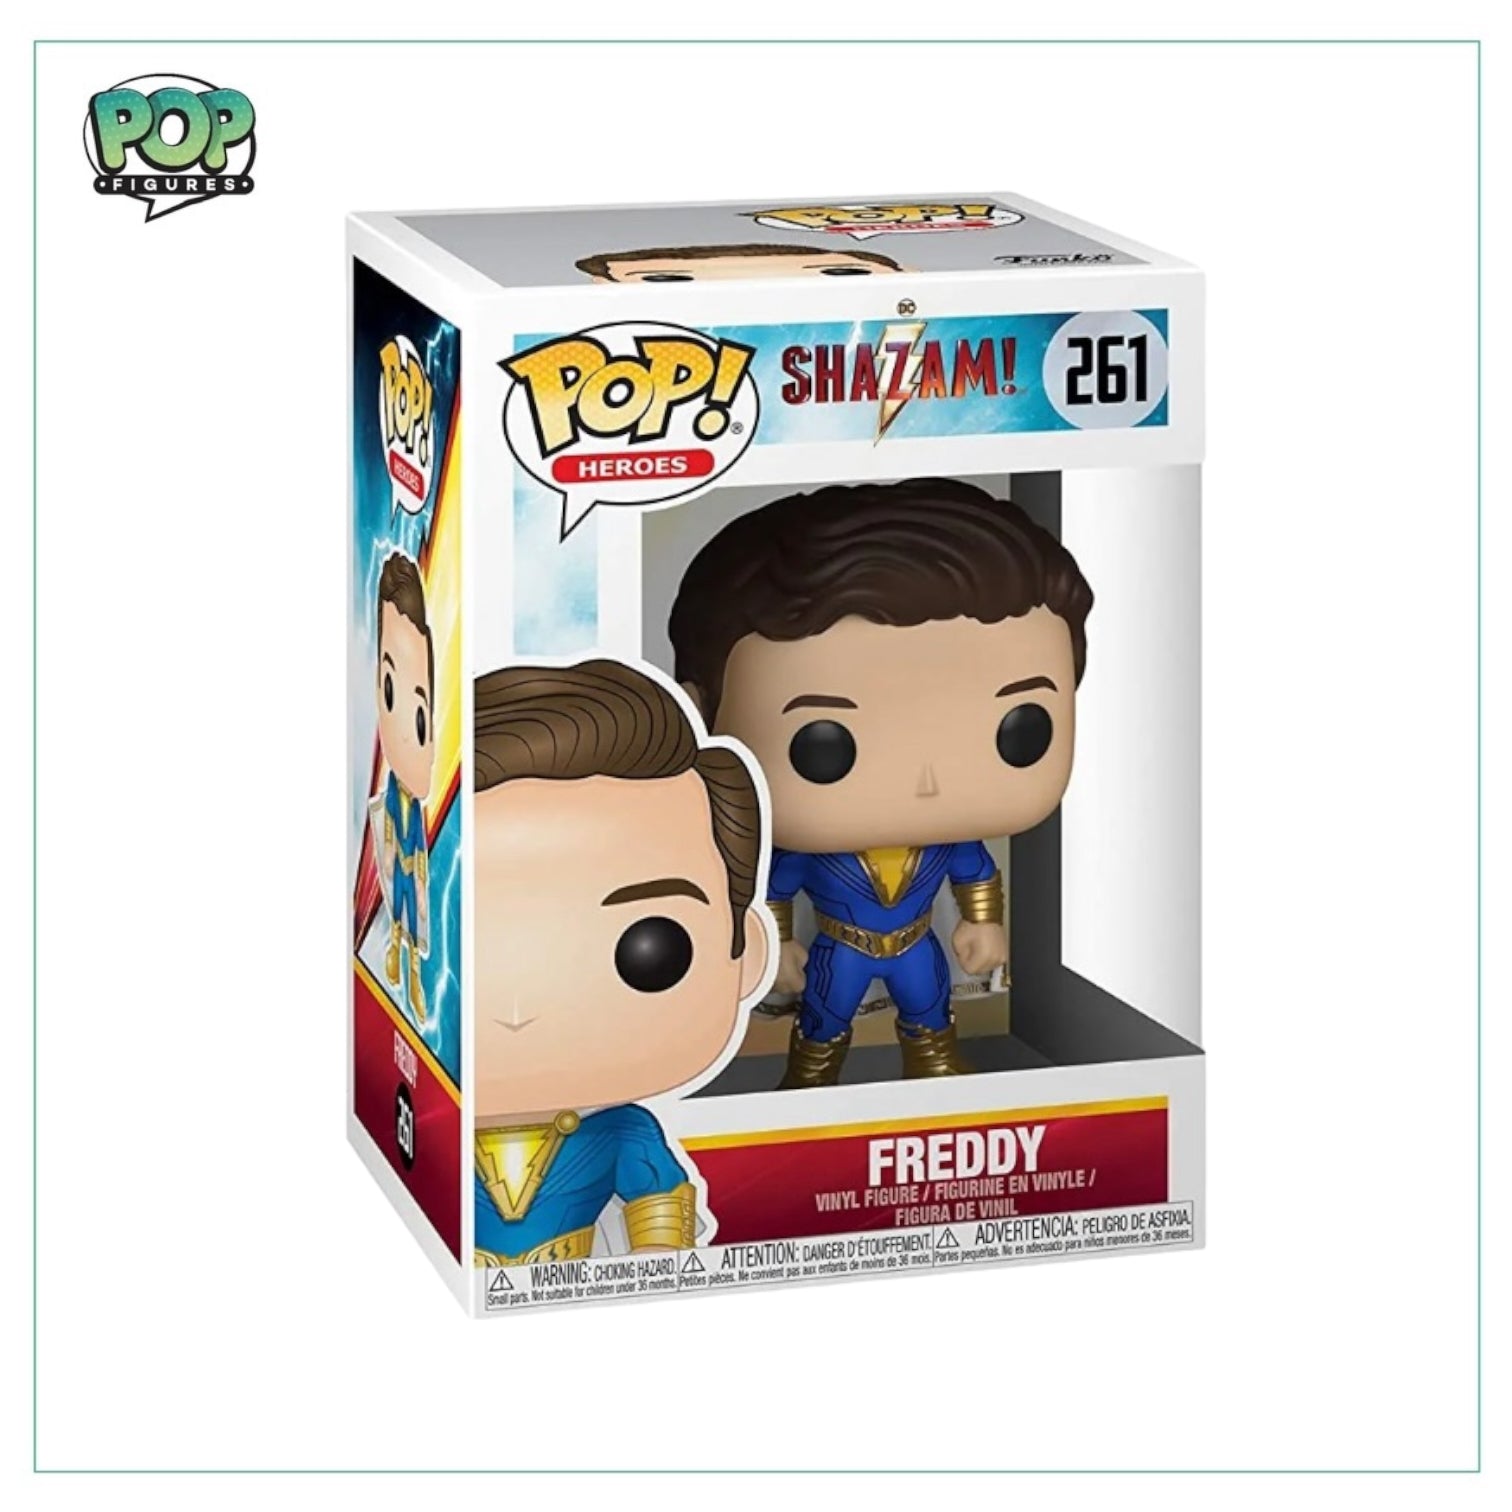 Freddy #261 Funko Pop! - Shazam